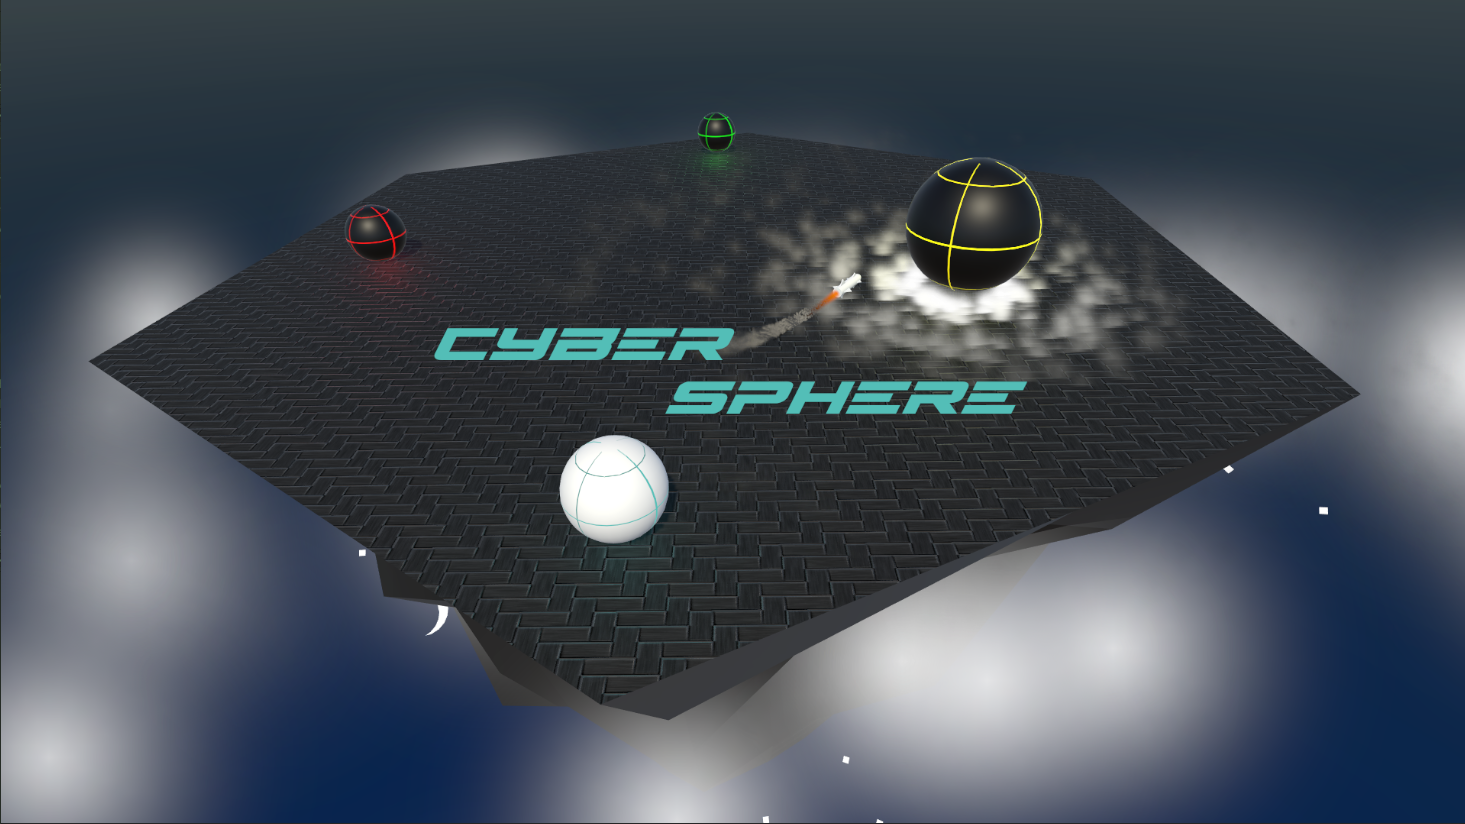 CyberSphere